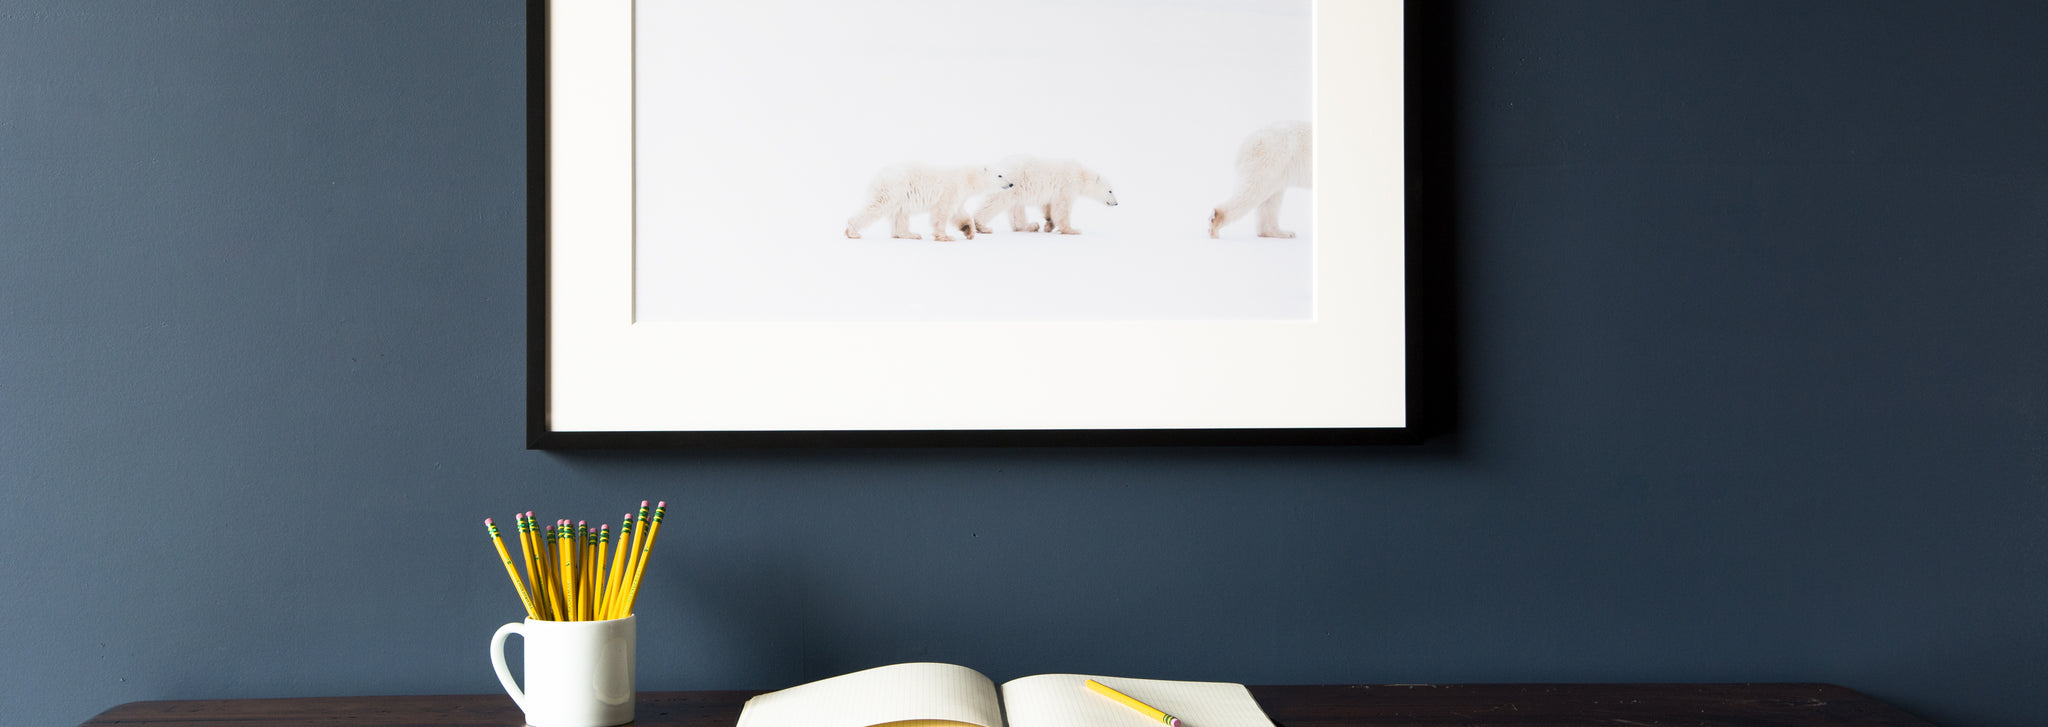 David duChemin arctic polar bears Saw & Mitre project 